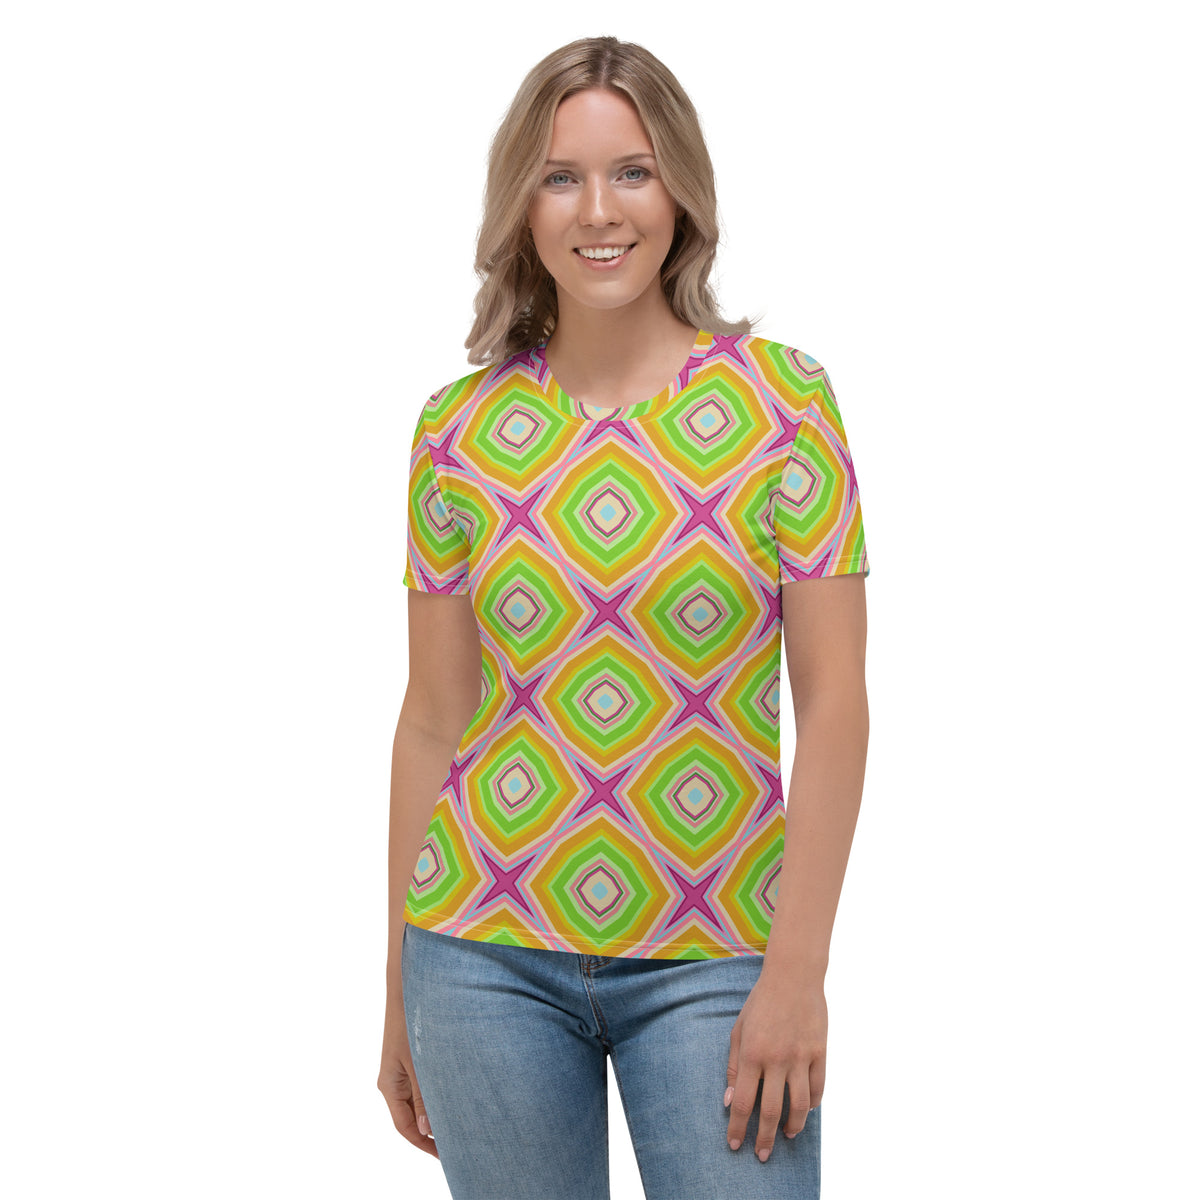 Geometric Harmony pattern on women's crewneck t-shirt.